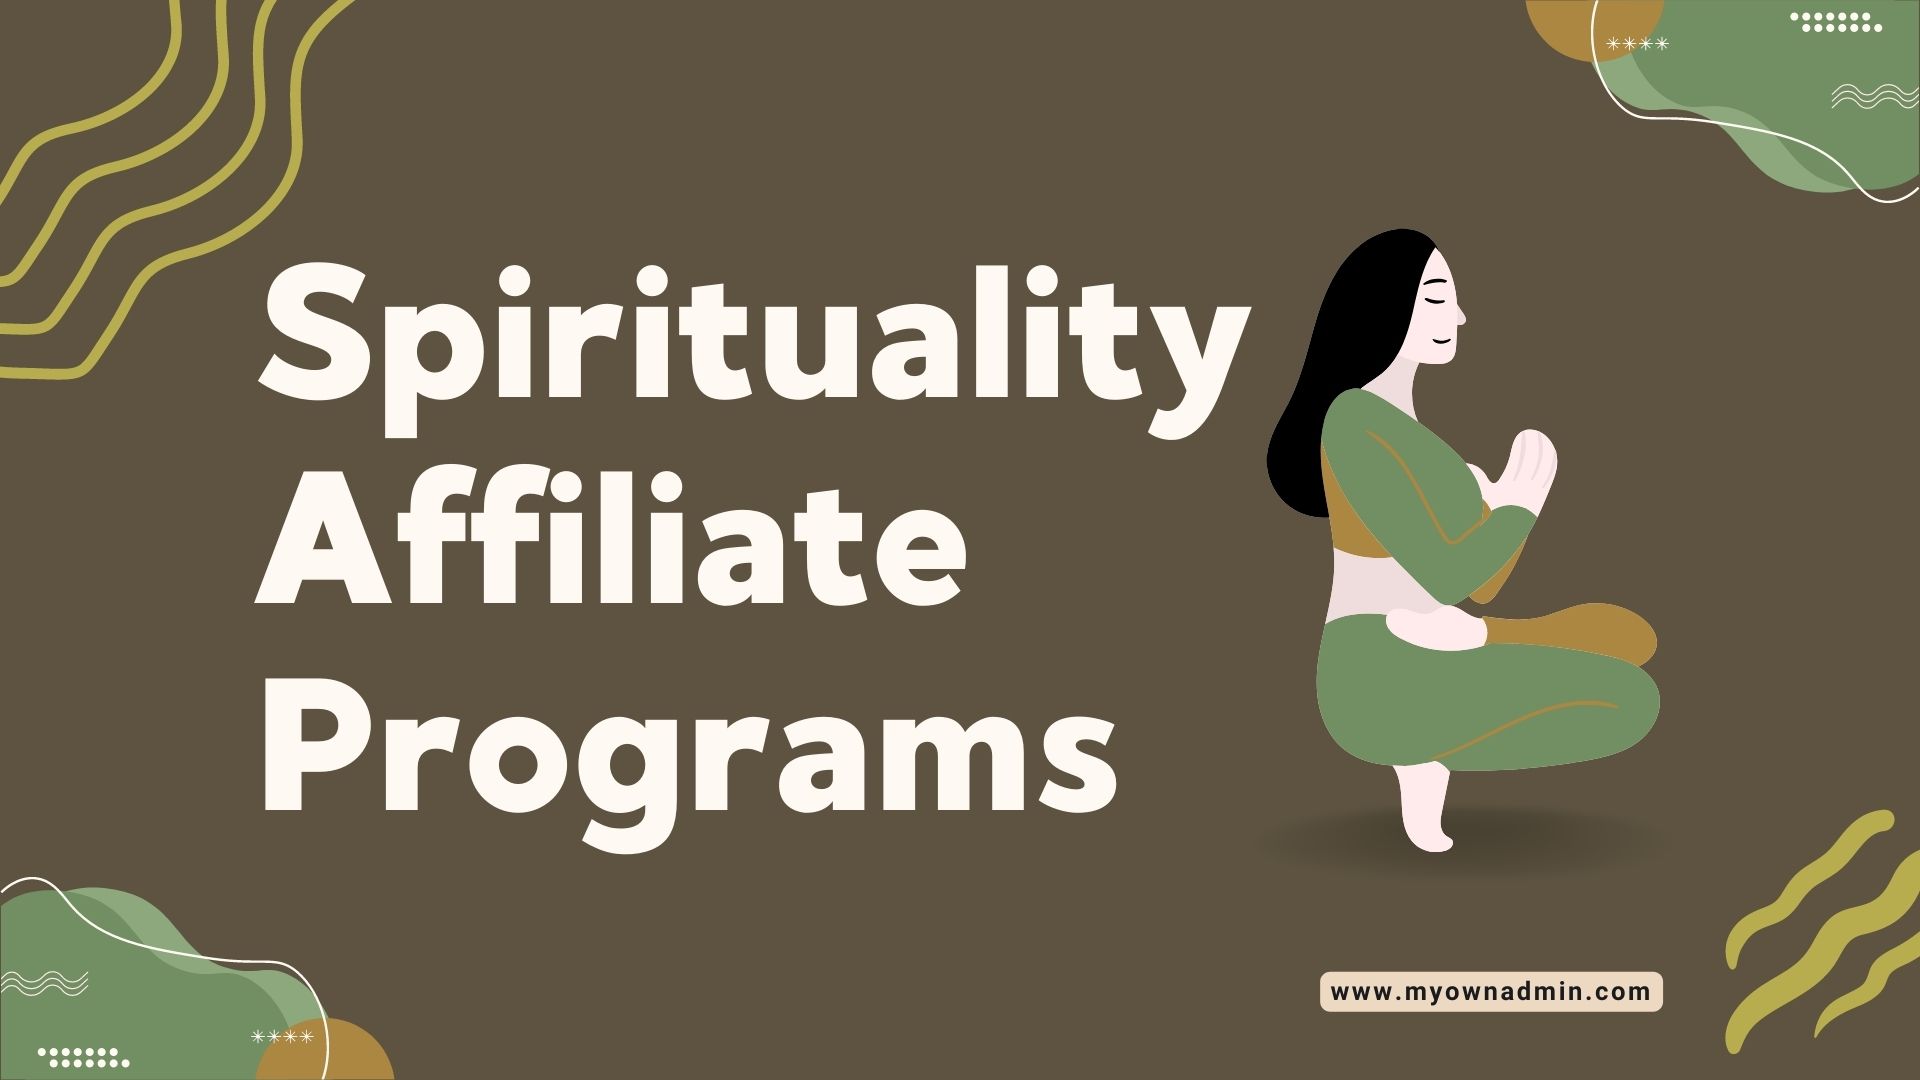 Spirituality Affiliate Programs